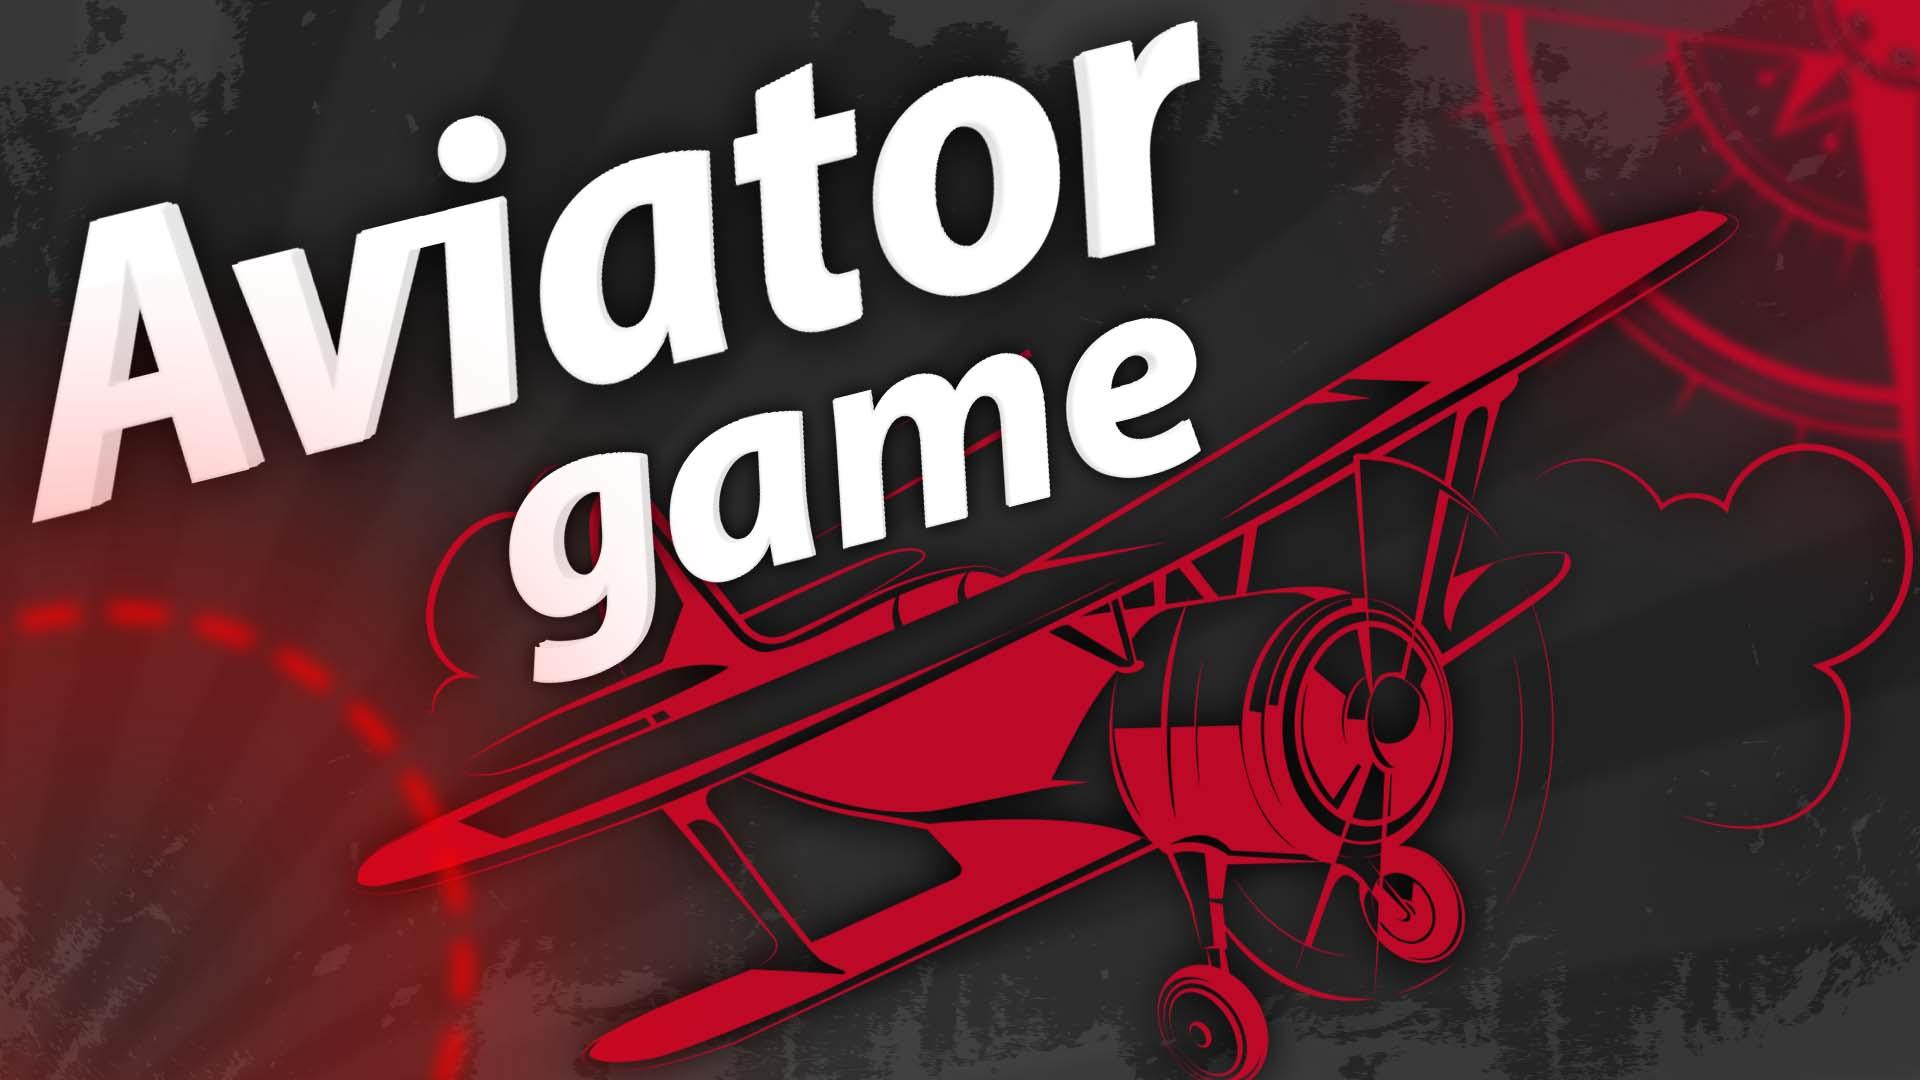 Авиатор aviator game 2 aviator. Авиатор гейм. Aviator игра. Авиатор игра лого. Aviator Slot логотип.